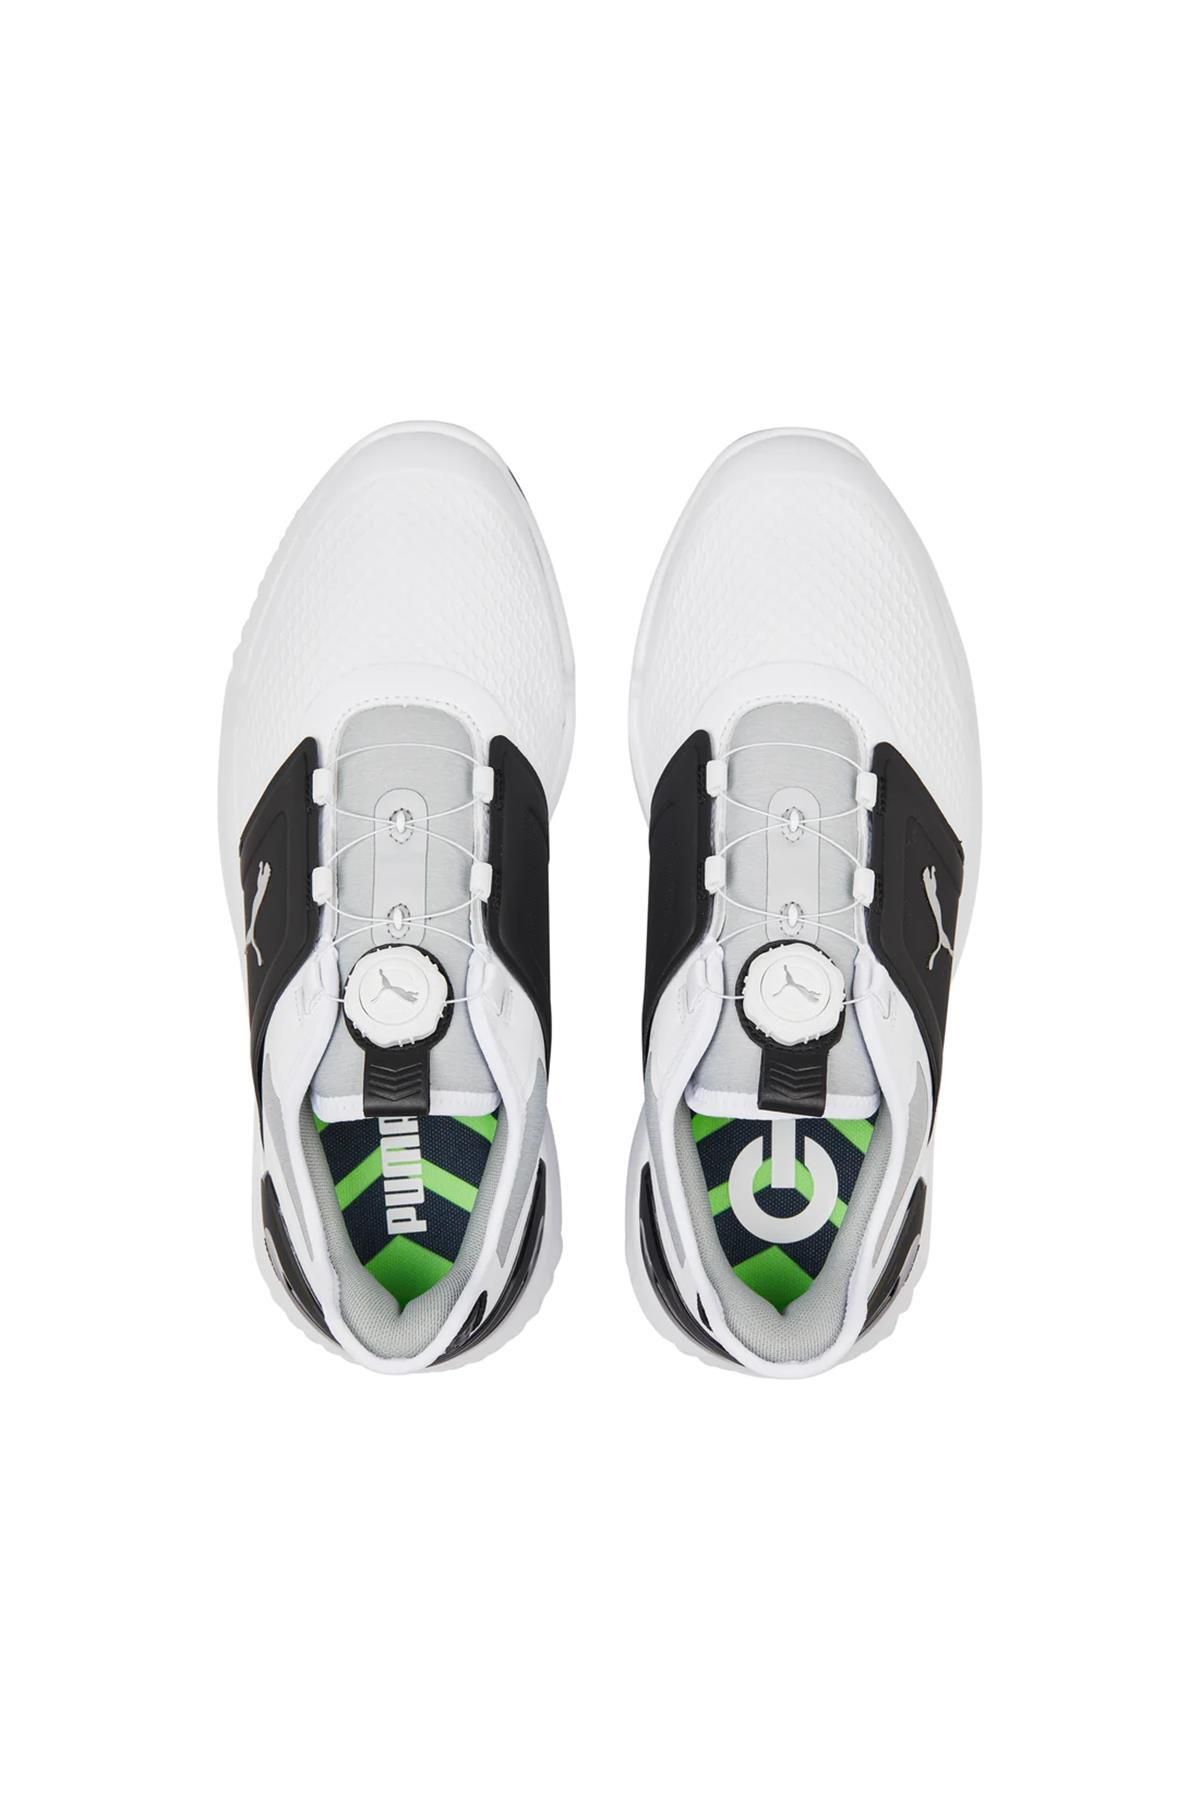 Puma Ignite Elevate Disc Shoes - Erkek Golf Ayakkabısı